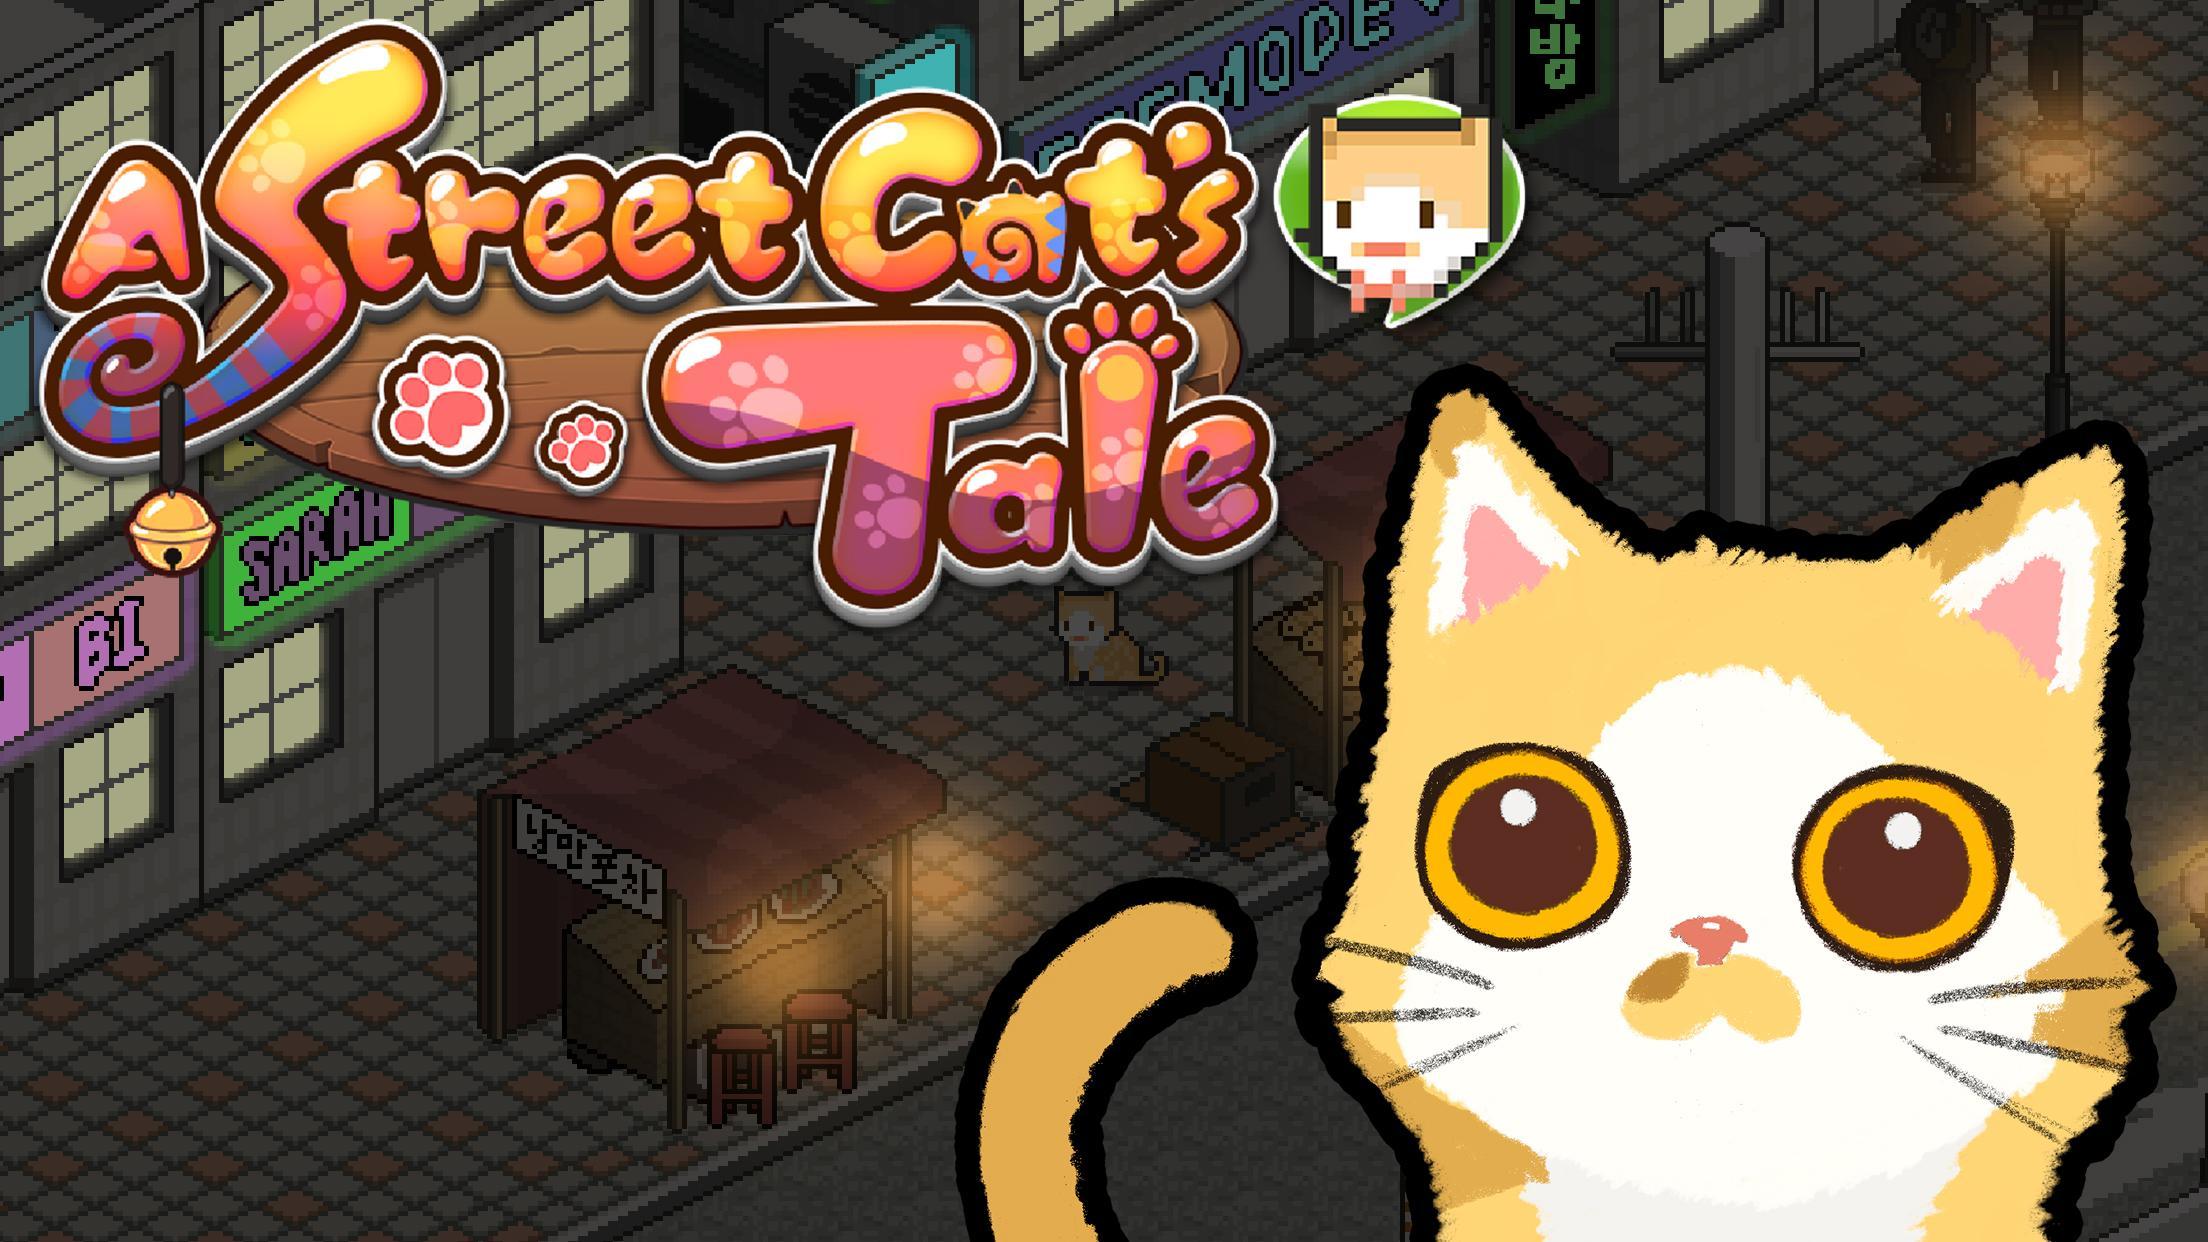 Игра котята 18. Игра a Street Cat's Tale. A Street Cat's Tale последняя версия. Игры про котят. Пиксельные котики игра.